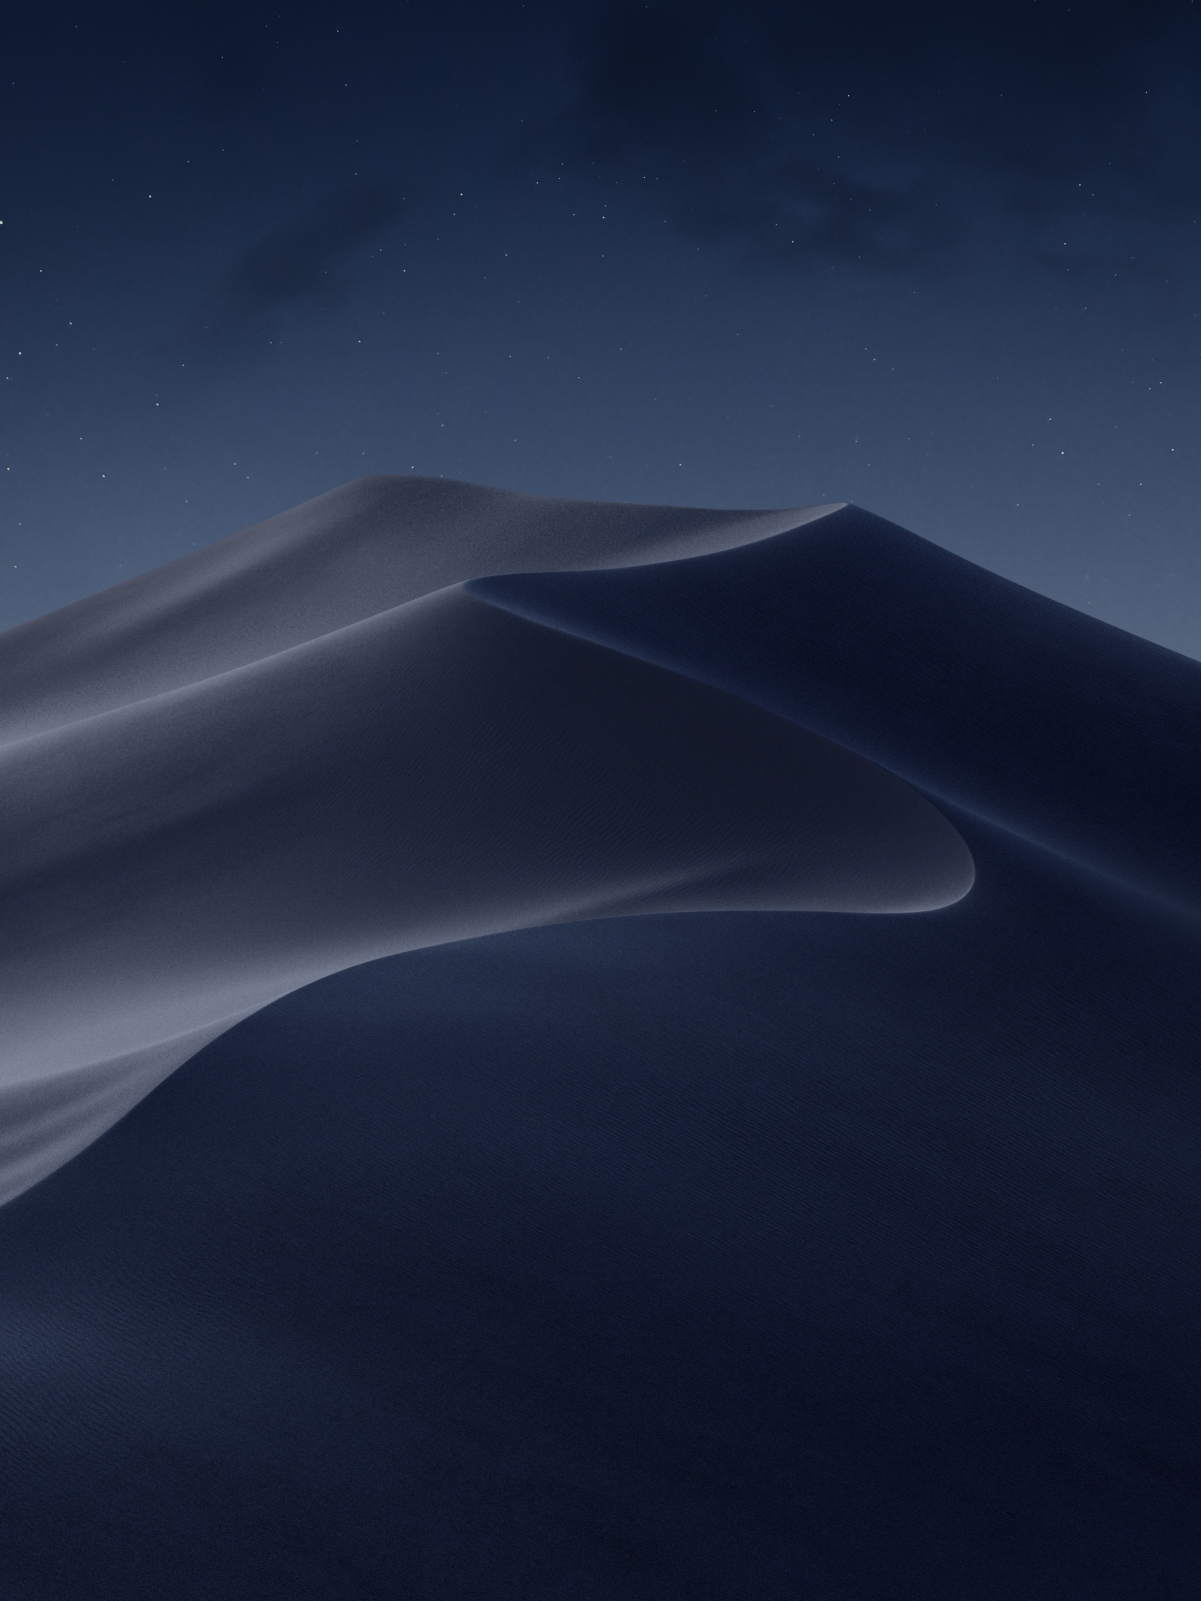 【2160x2880】苹果macOS Mojave iPad壁纸 晚上沙漠风景